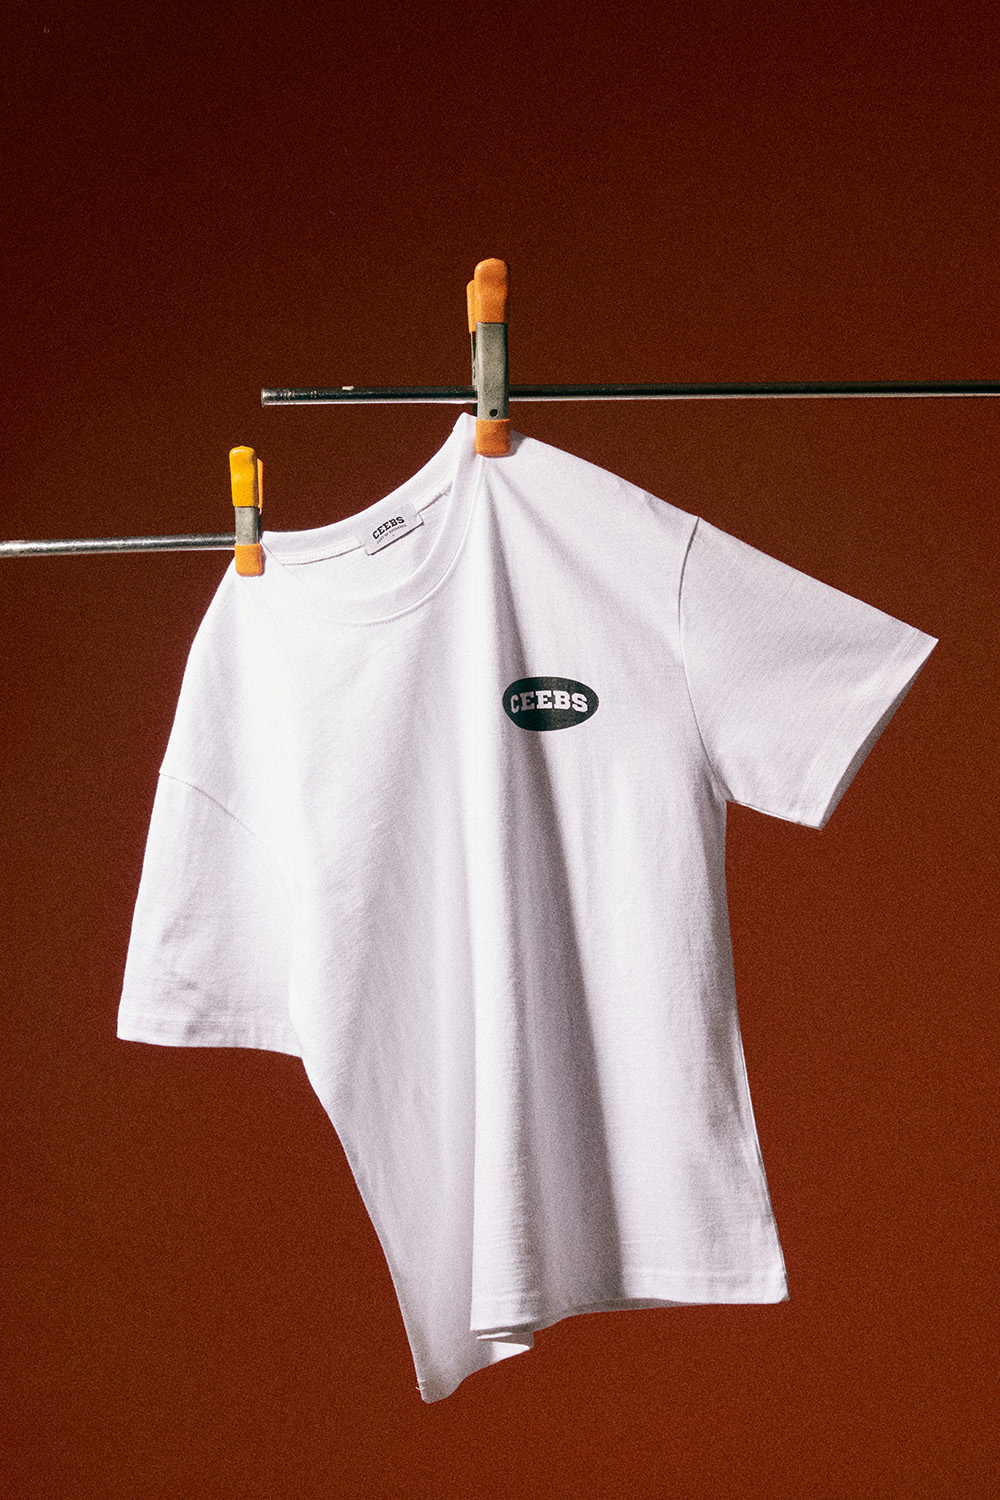 CEEBS 001 Standard T-shirt    (White)